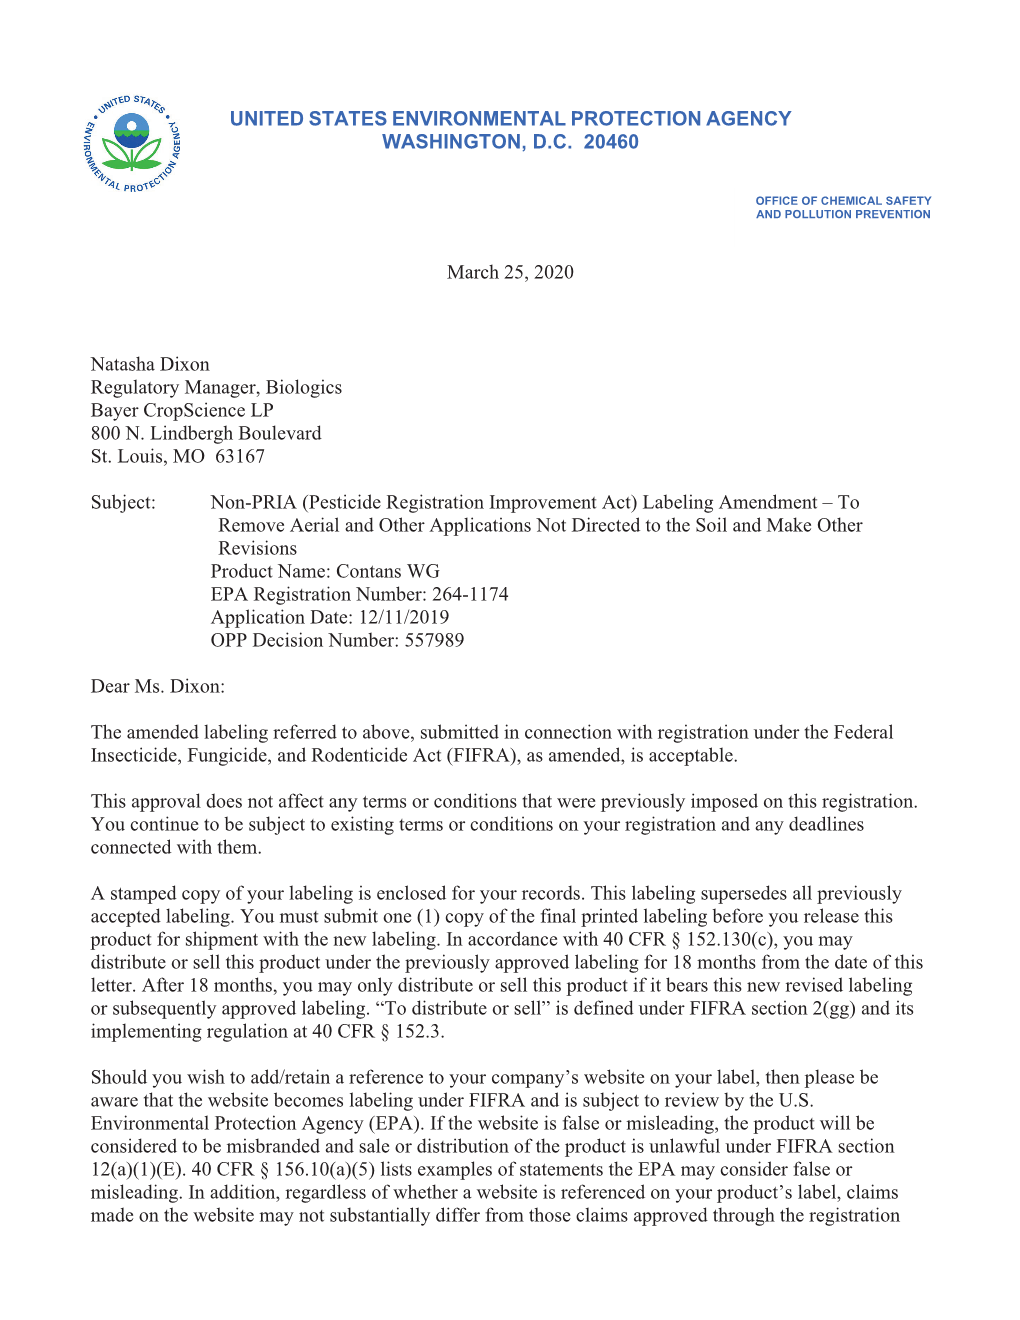 US EPA, Pesticide Product Label, CONTANS WG,03/25/2020